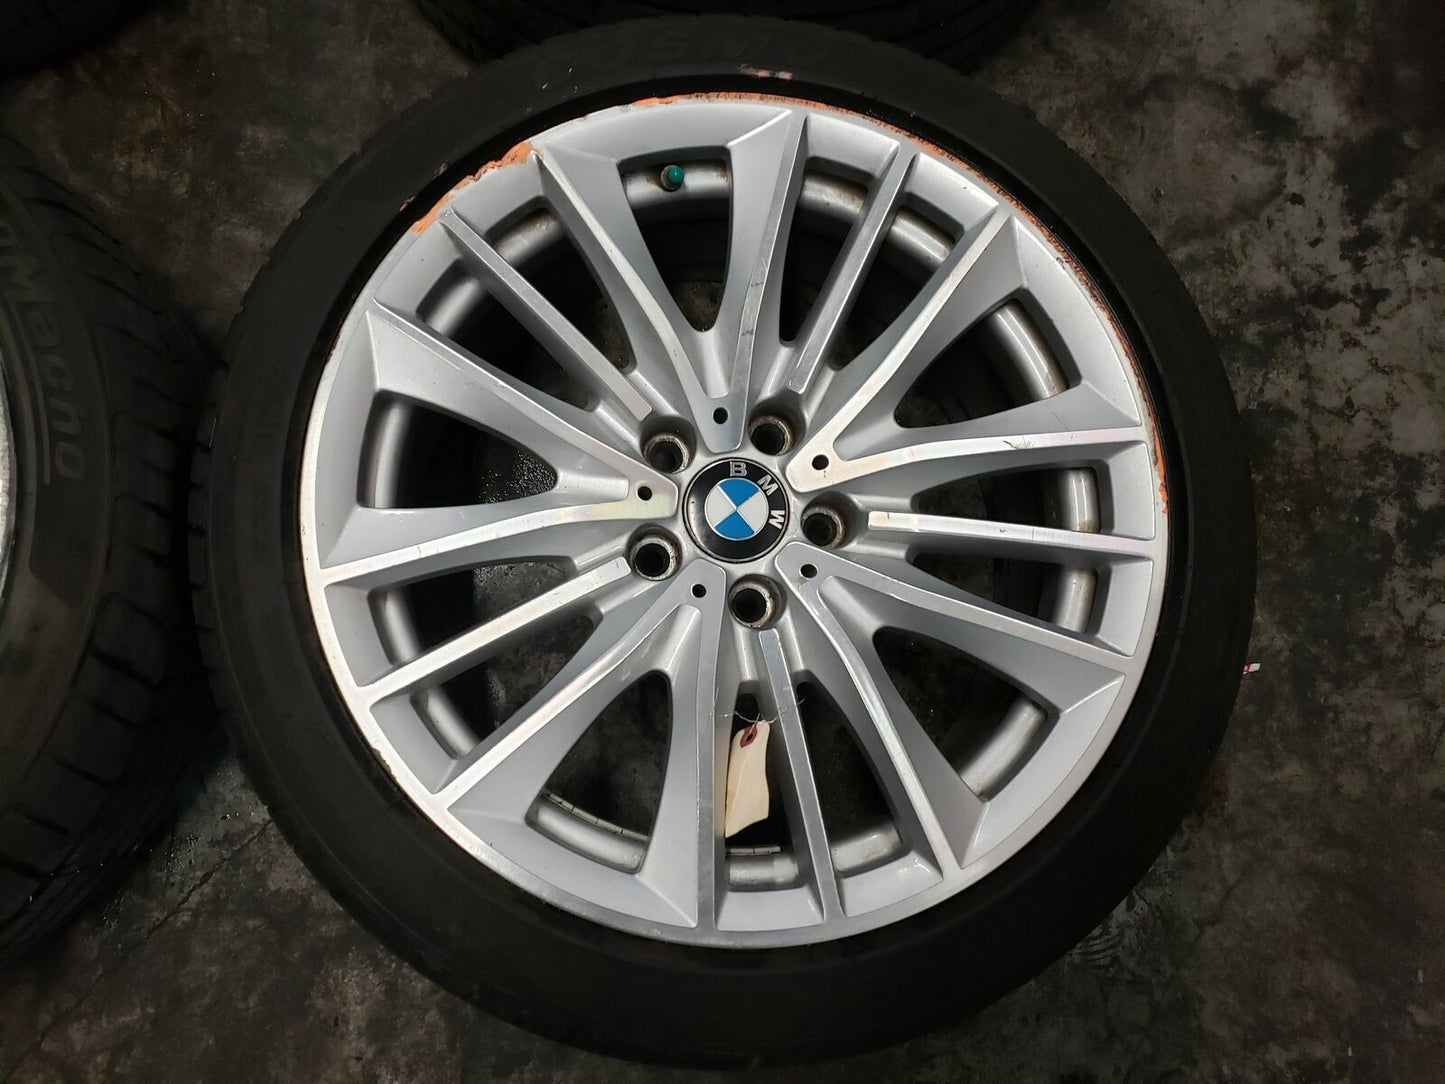 BMW F10 Series Rims Wheels 6791383 19" STYLE 332 8 1/2